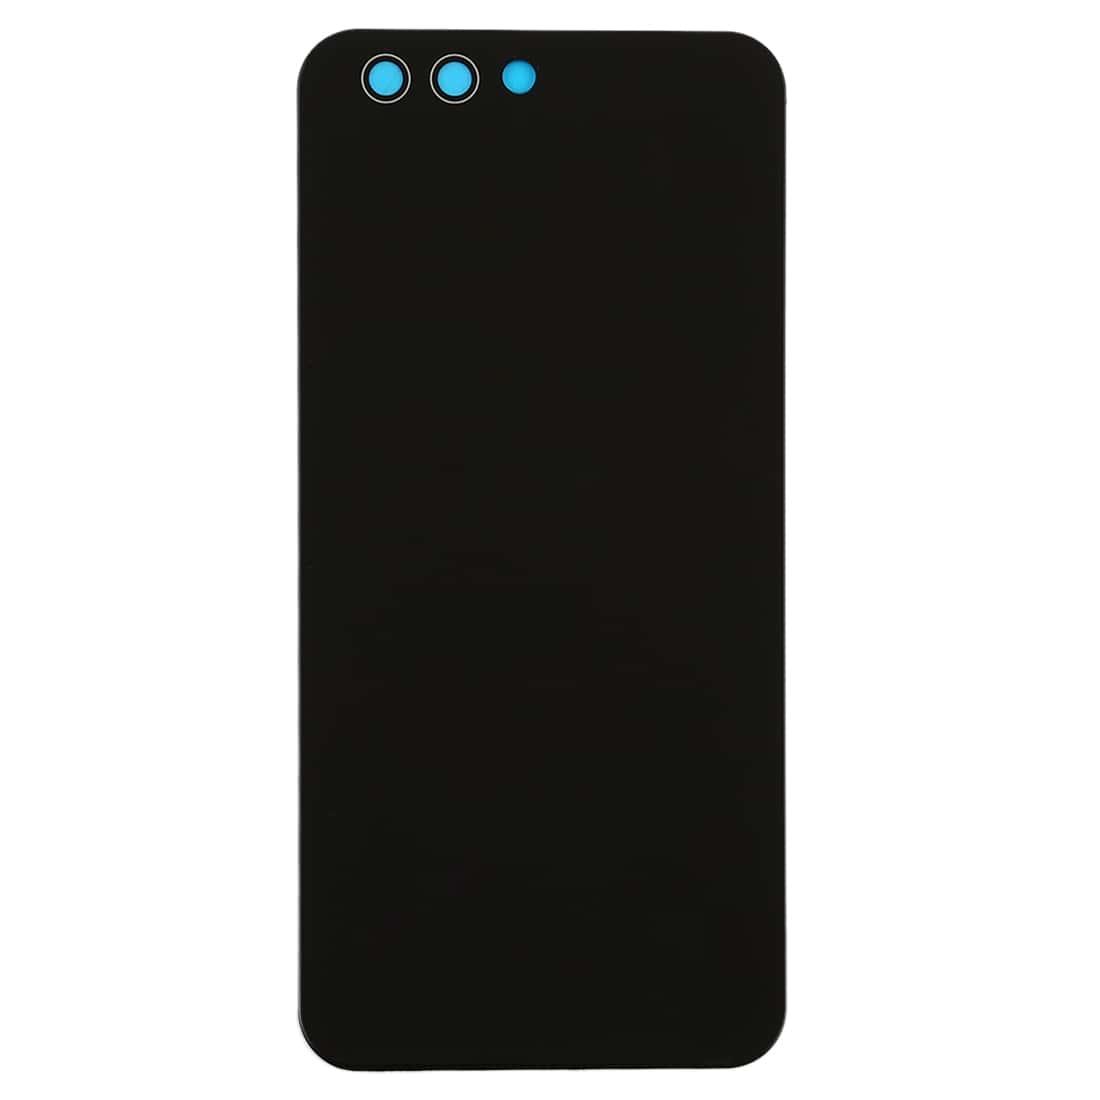 Back Panel Housing Body for Asus ZenFone 4 ZE554KL Black with Camera Lens